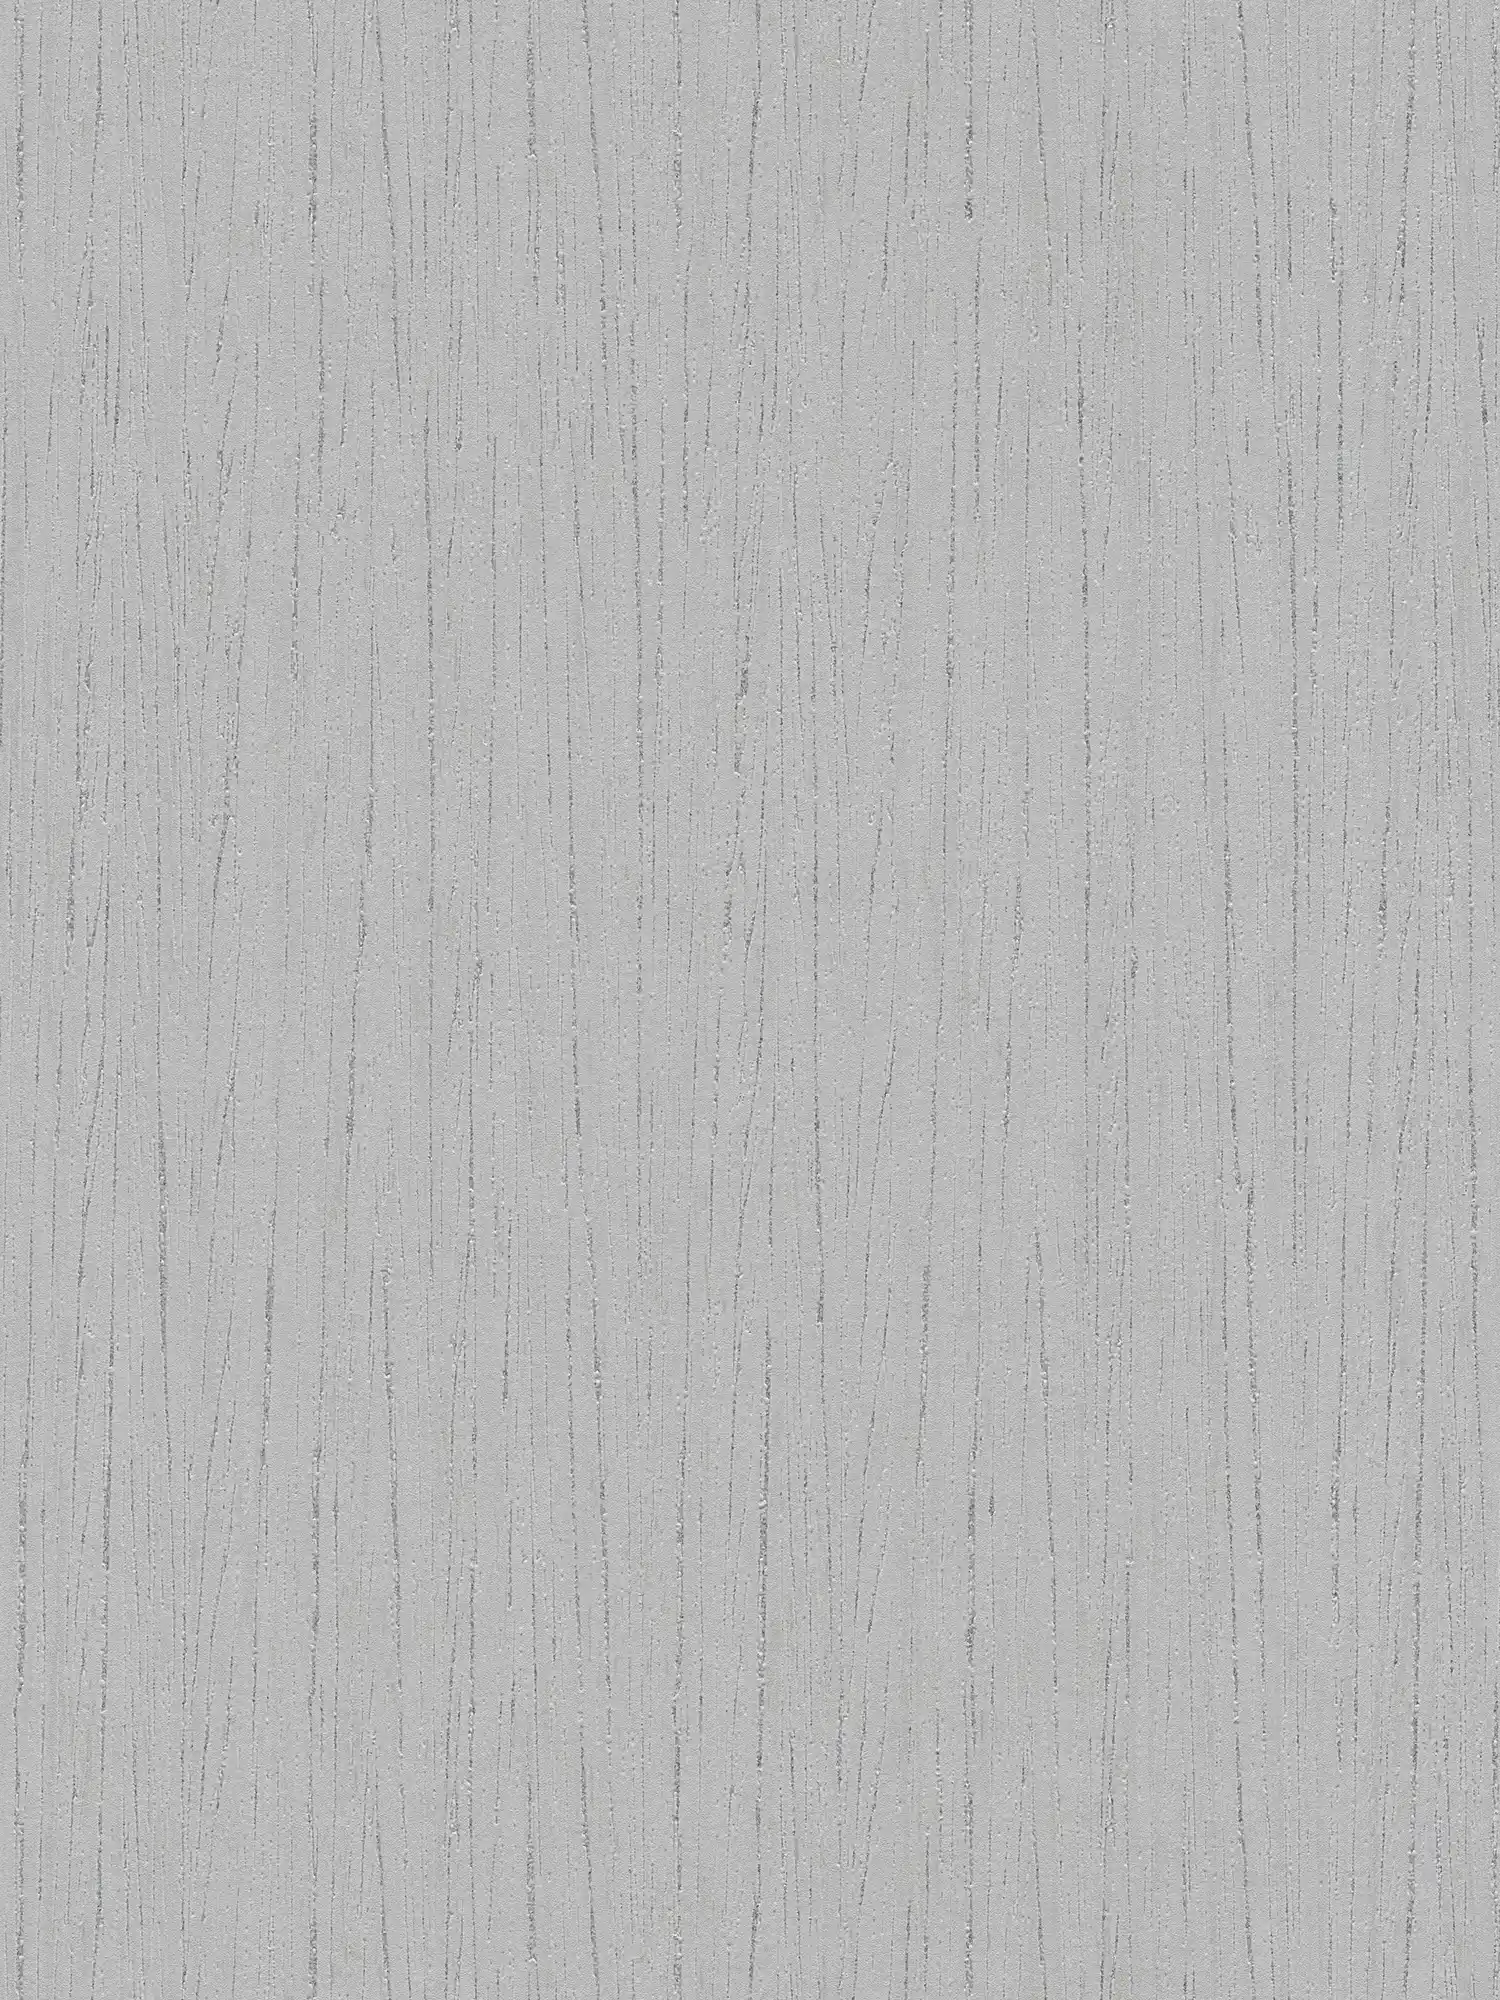 Tapete Taubengrau mit Textur & Farbeffekt – Grau
